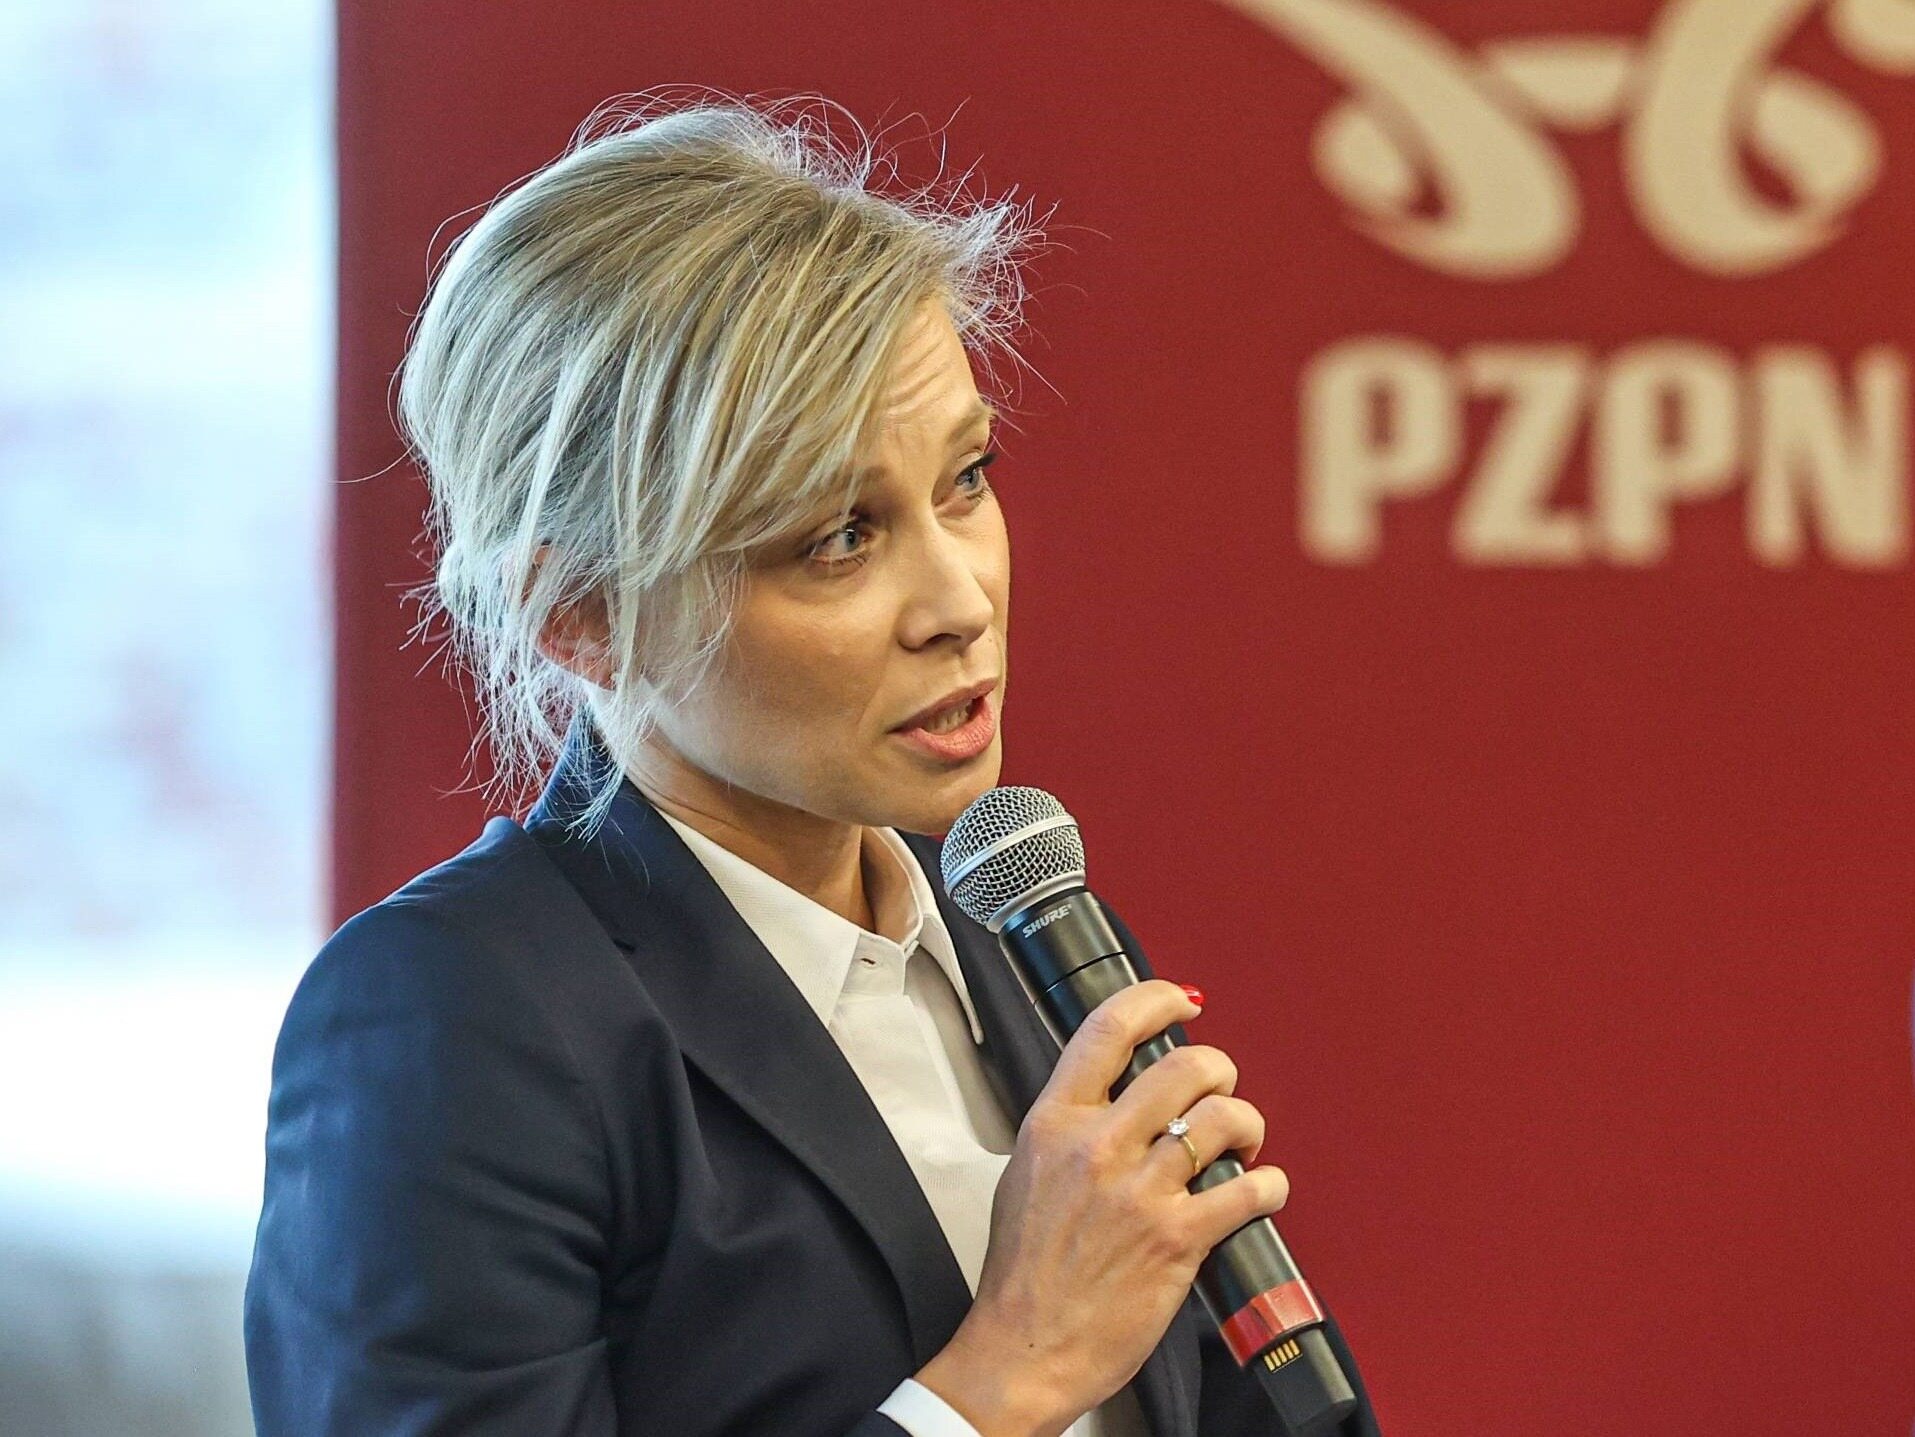 Aleksandra Kostrzewska leaves the Polish Football Association.  An important change in a key position